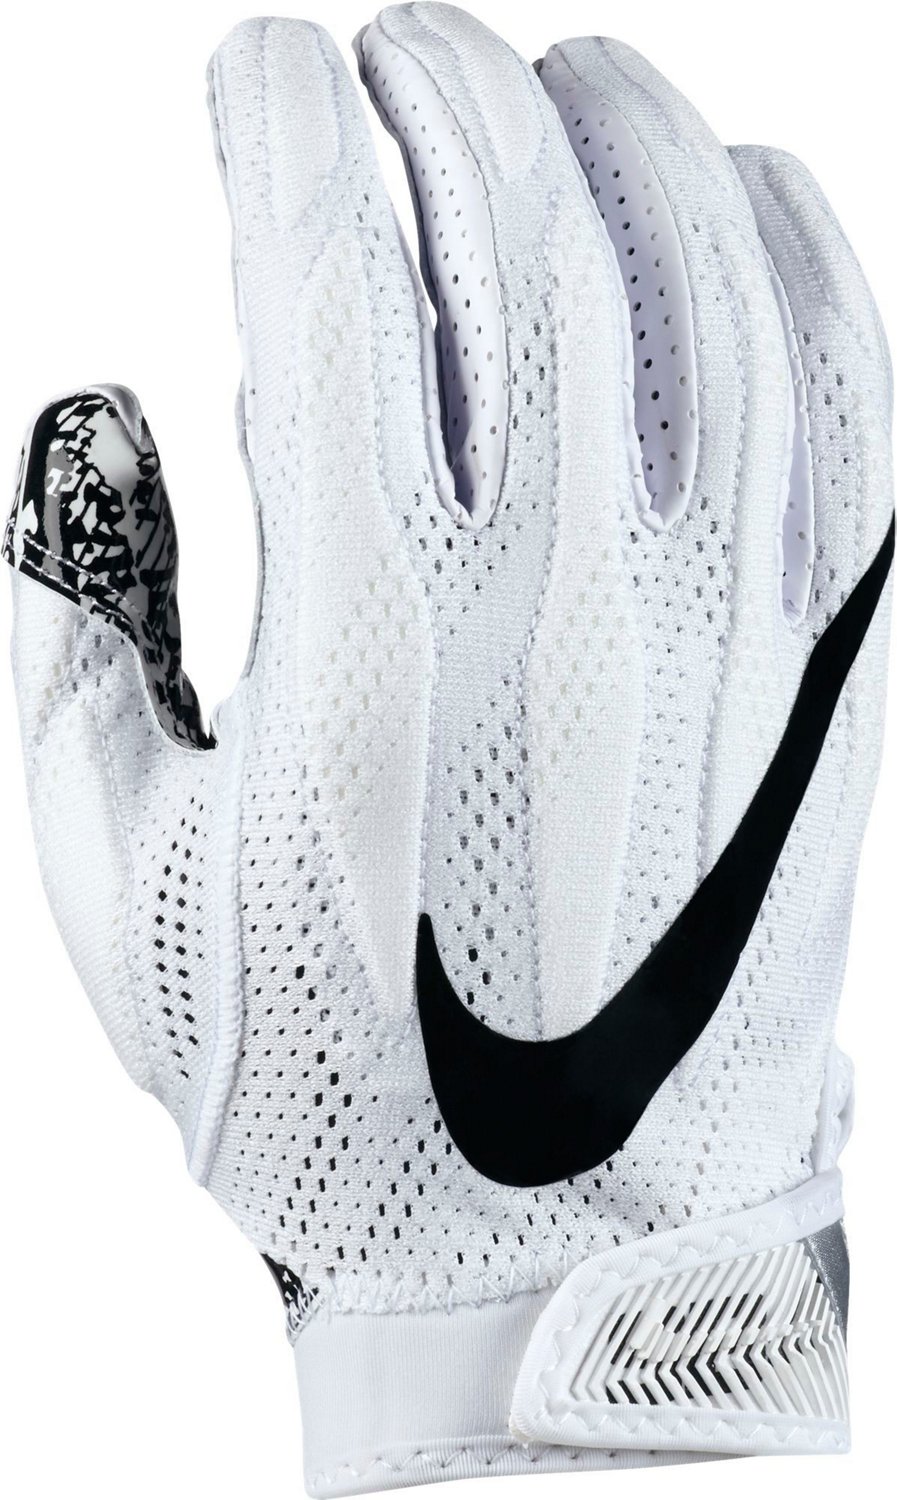 cheap white nike football gloves